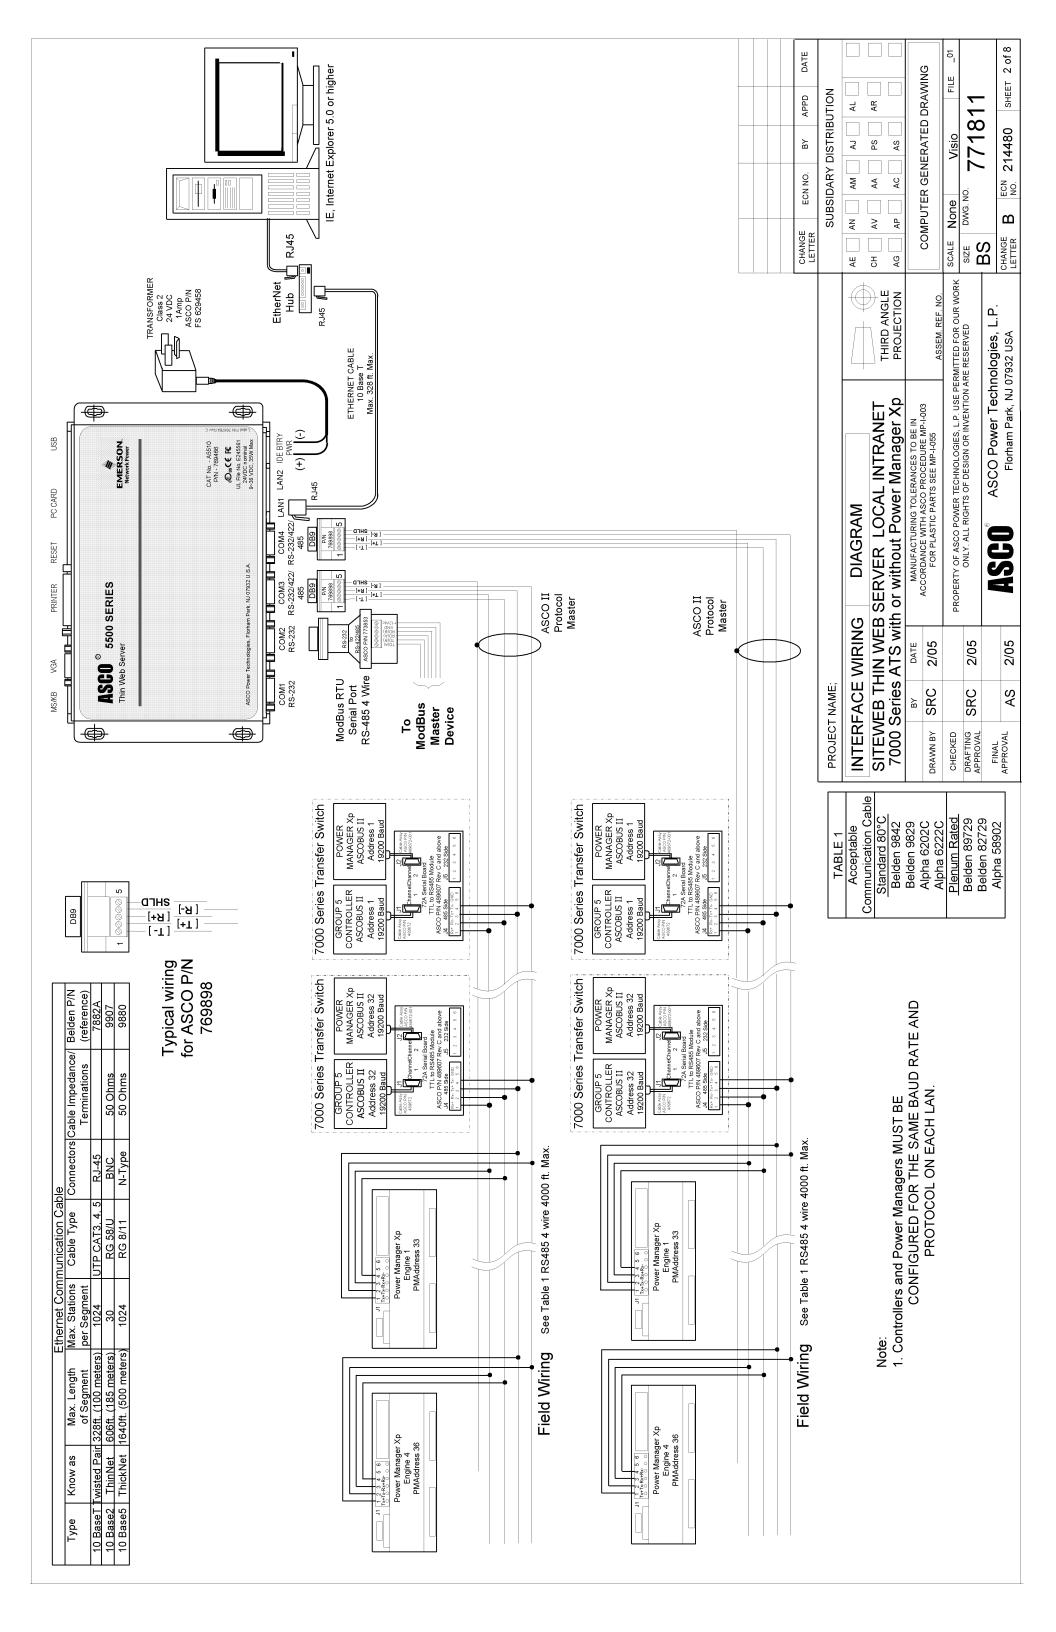 Emerson 5500 SERIES, A5510 User Manual  Asco Group 5 Controller Wiring Diagram    ManualMachine.com